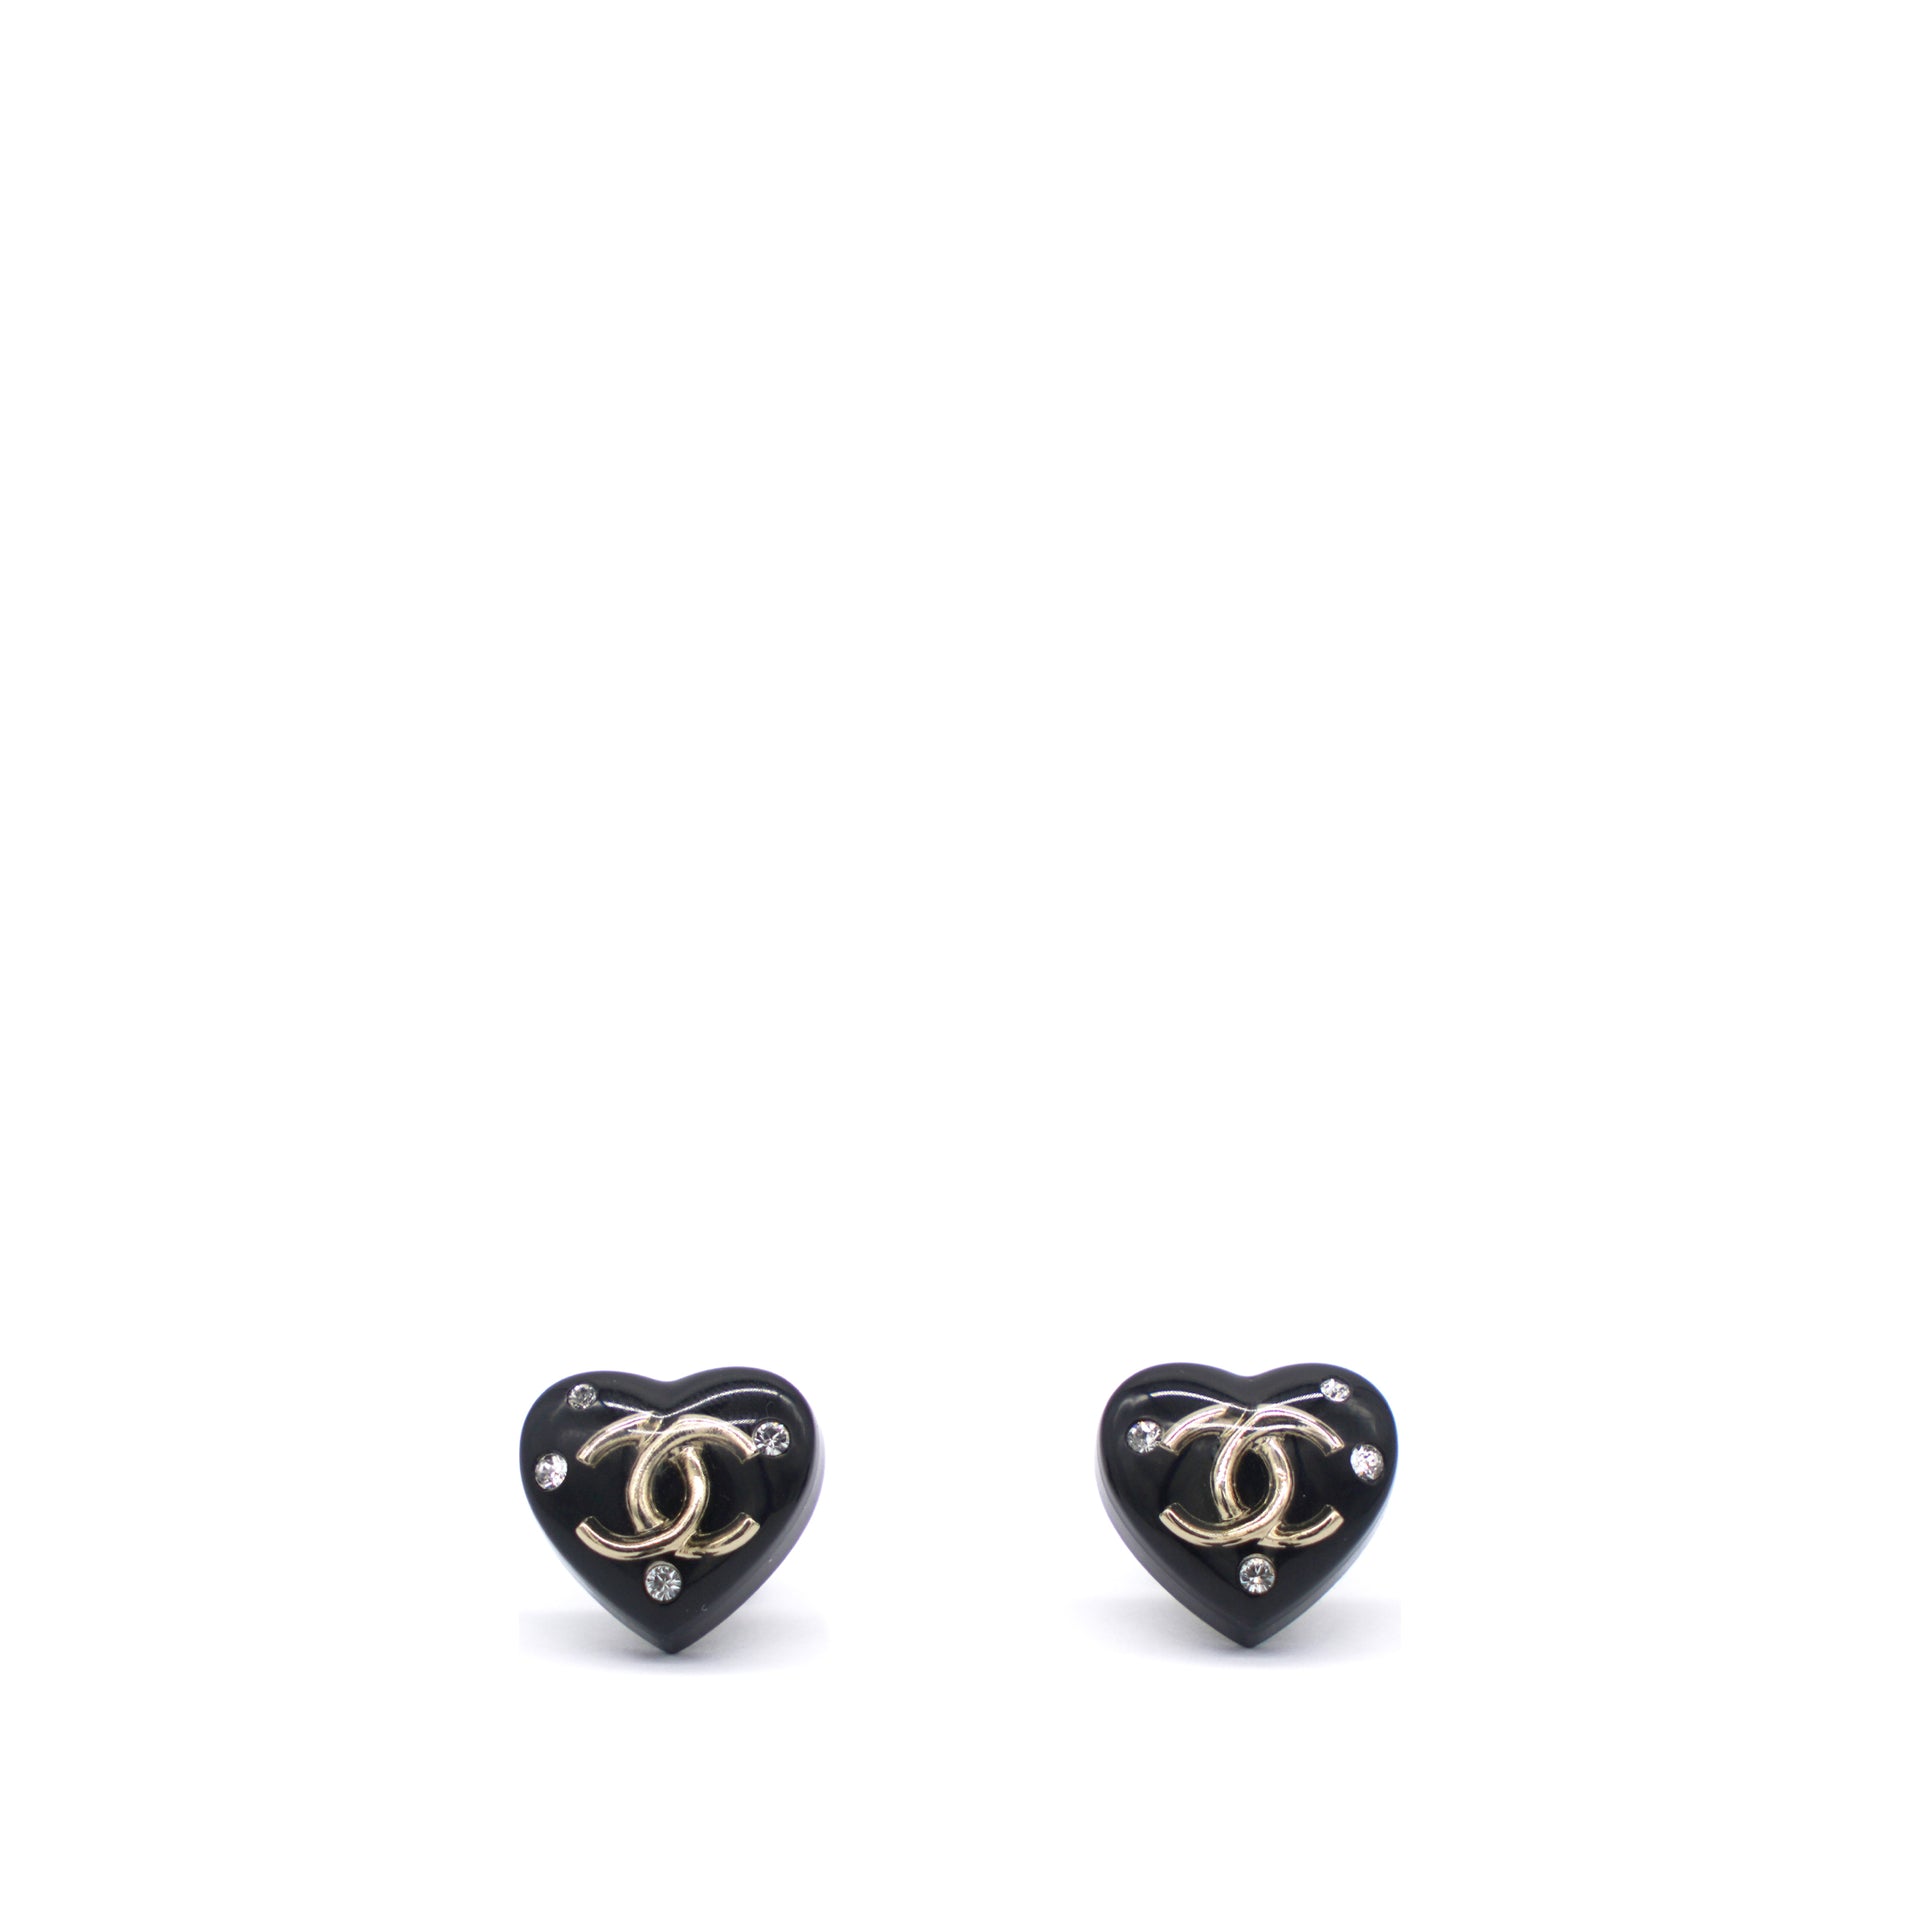 Resin Crystal CC Heart Earrings Black Gold